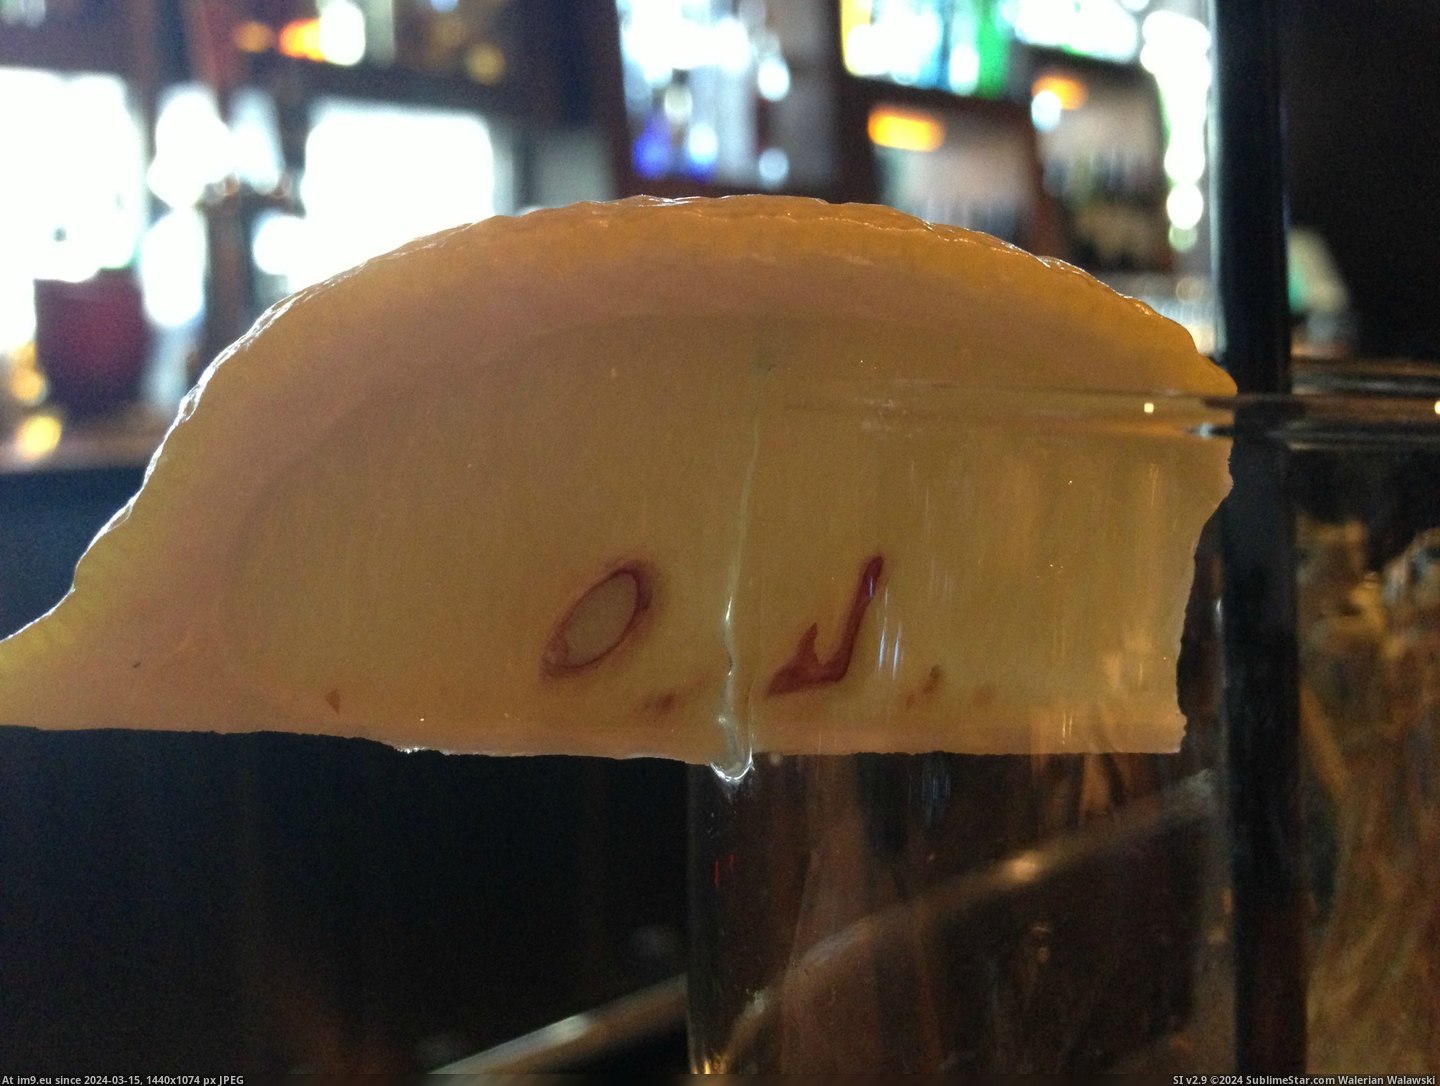 #Lemon #Spelled #Slice #Seeds [Mildlyinteresting] The seeds in this lemon slice spelled Pic. (Изображение из альбом My r/MILDLYINTERESTING favs))